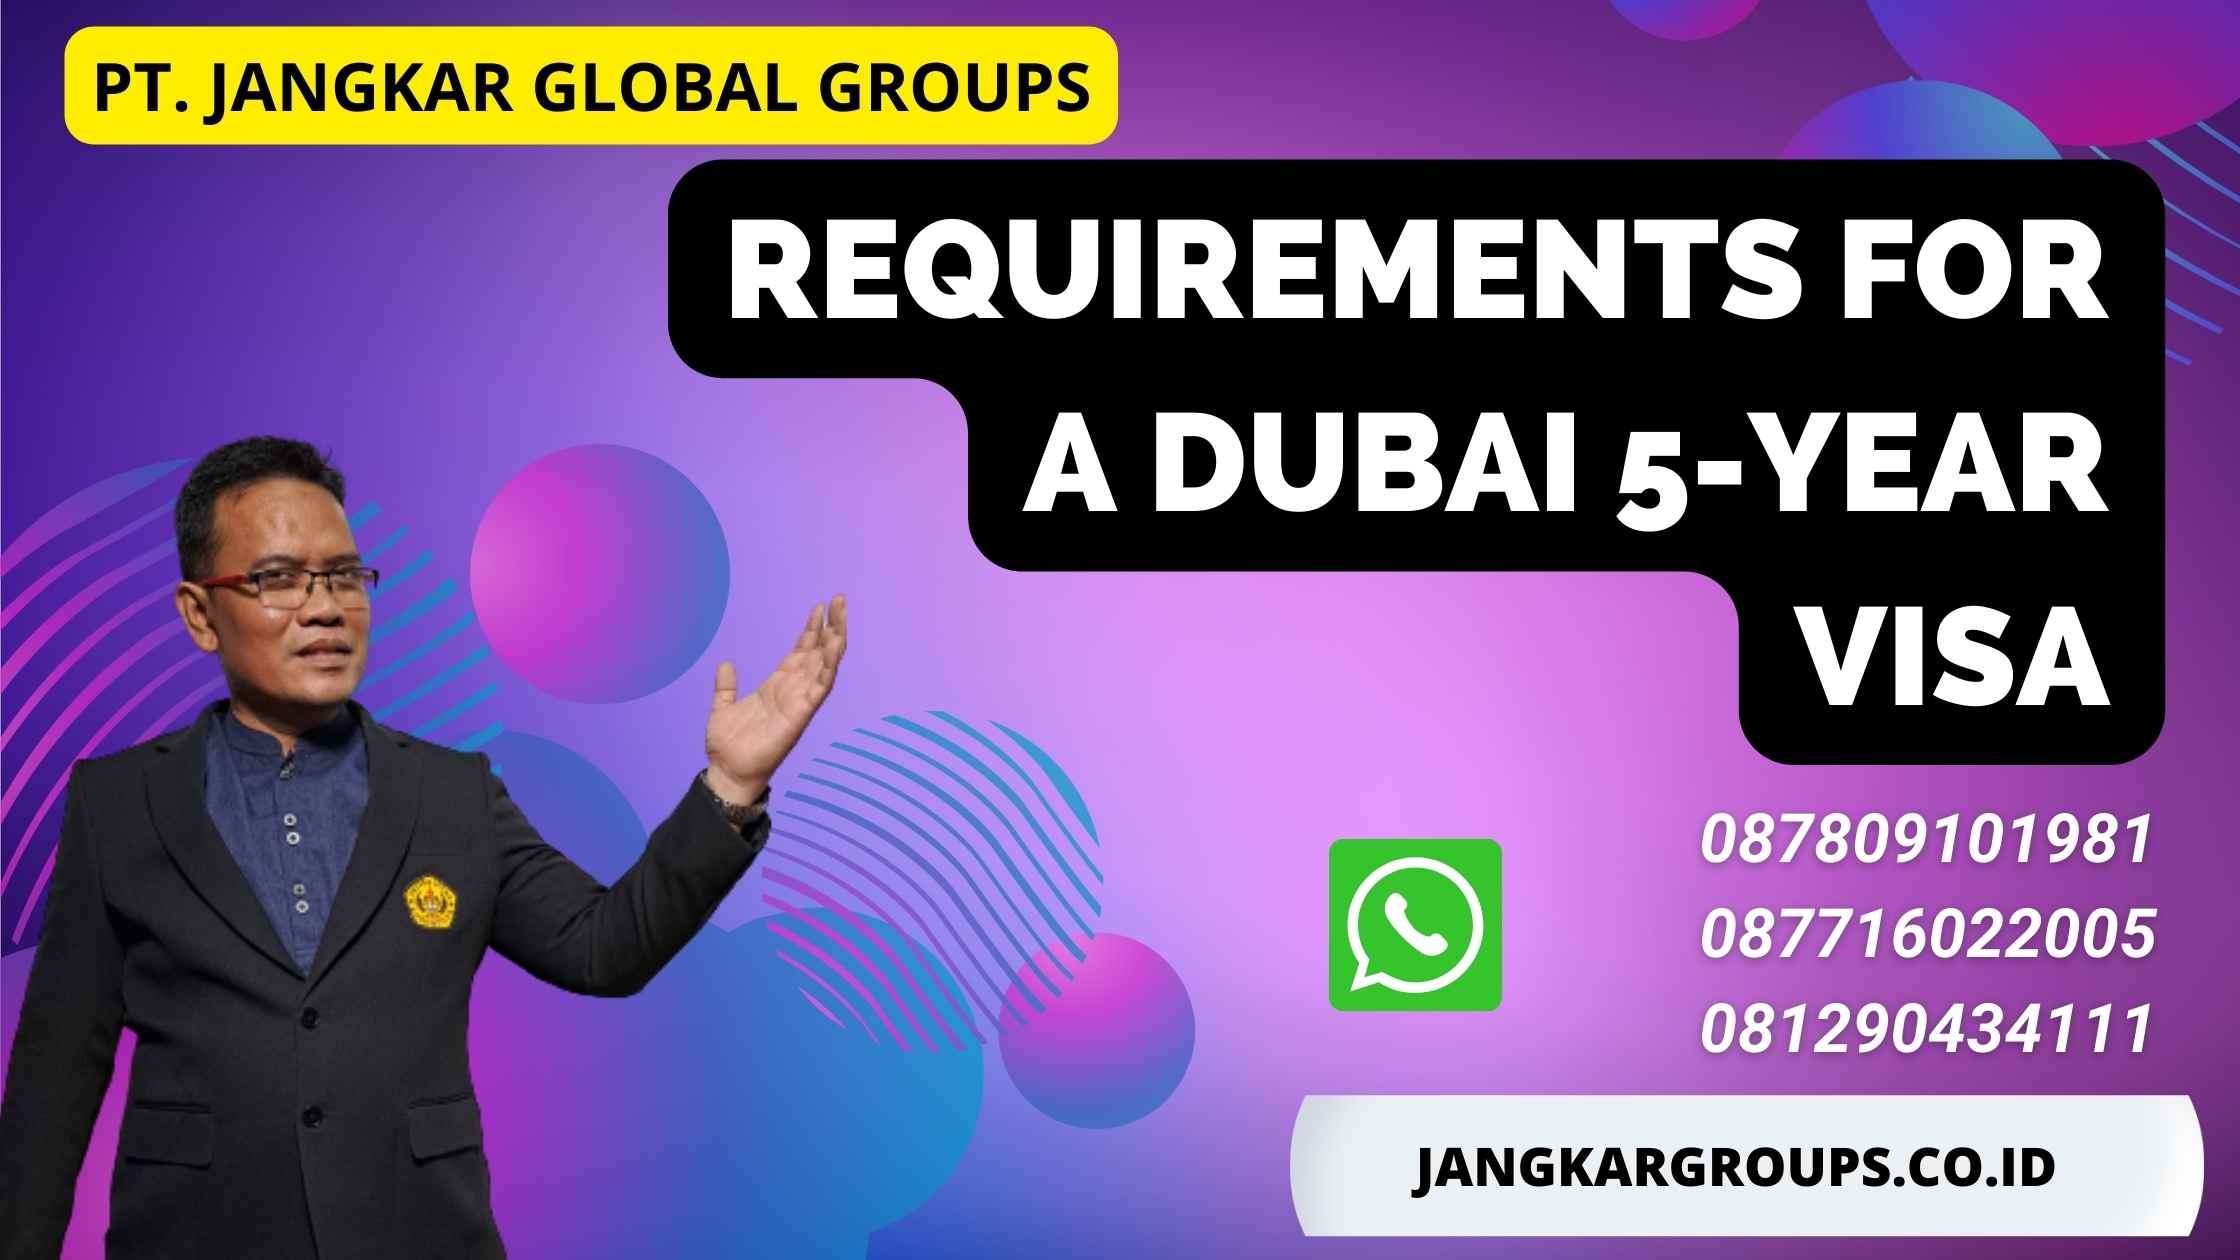 Requirements for a Dubai 5-Year Visa